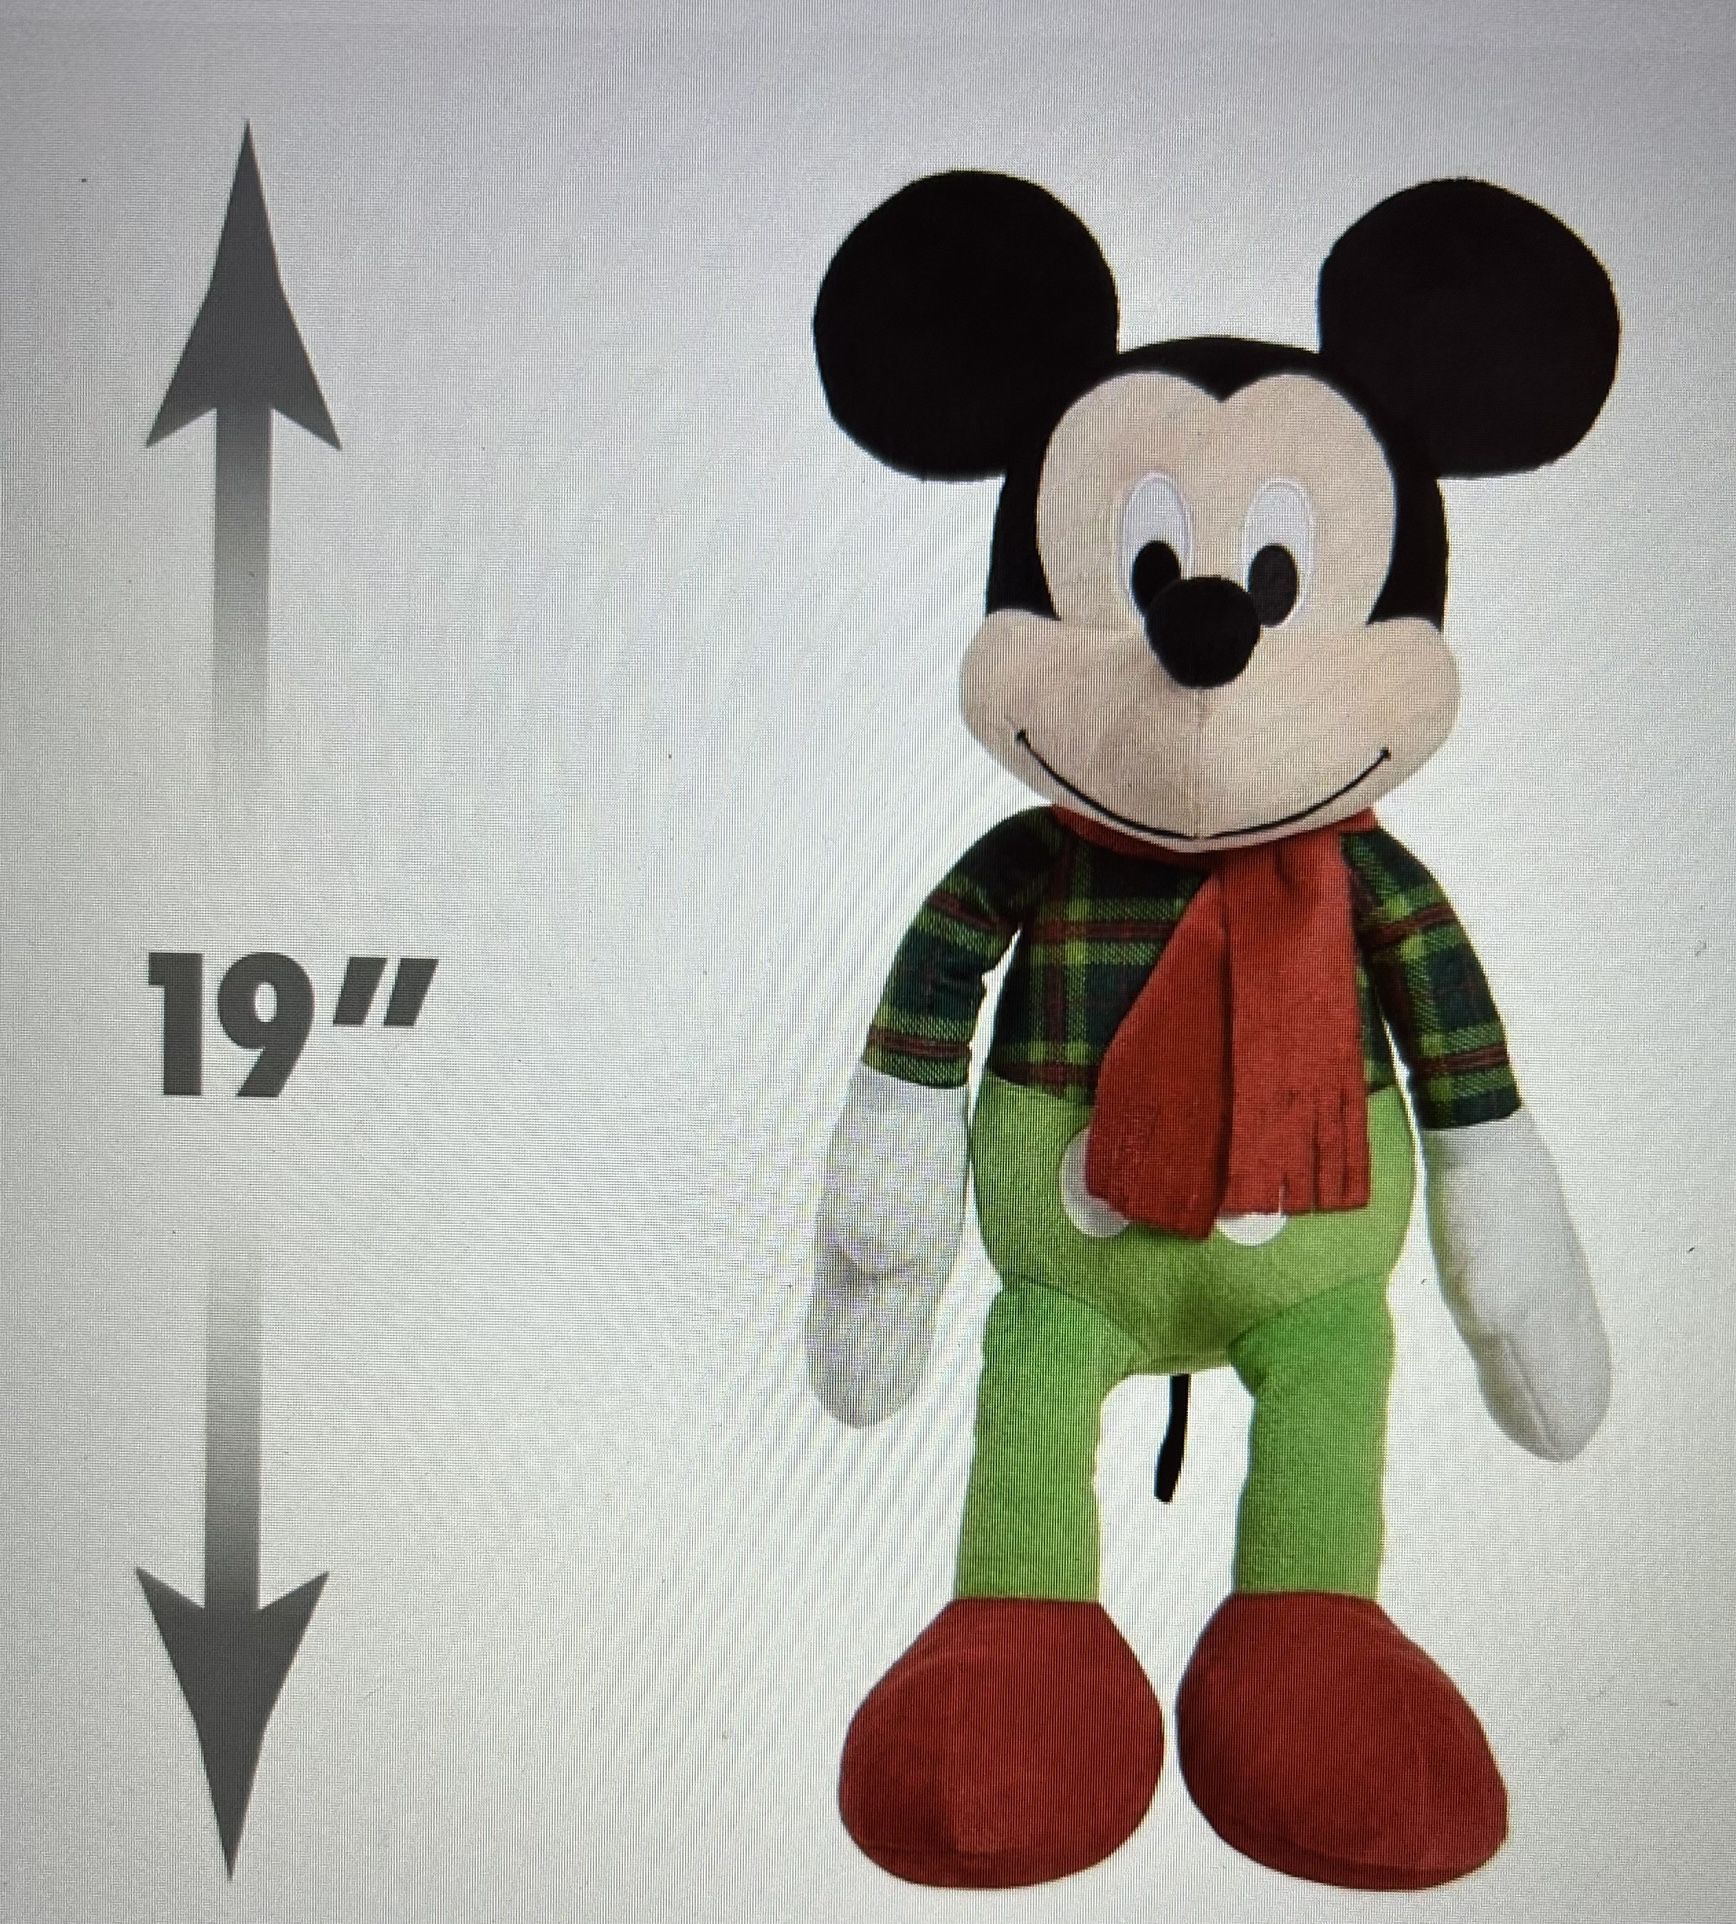 Disney Christmas Mickey Mouse 19” Large Plush